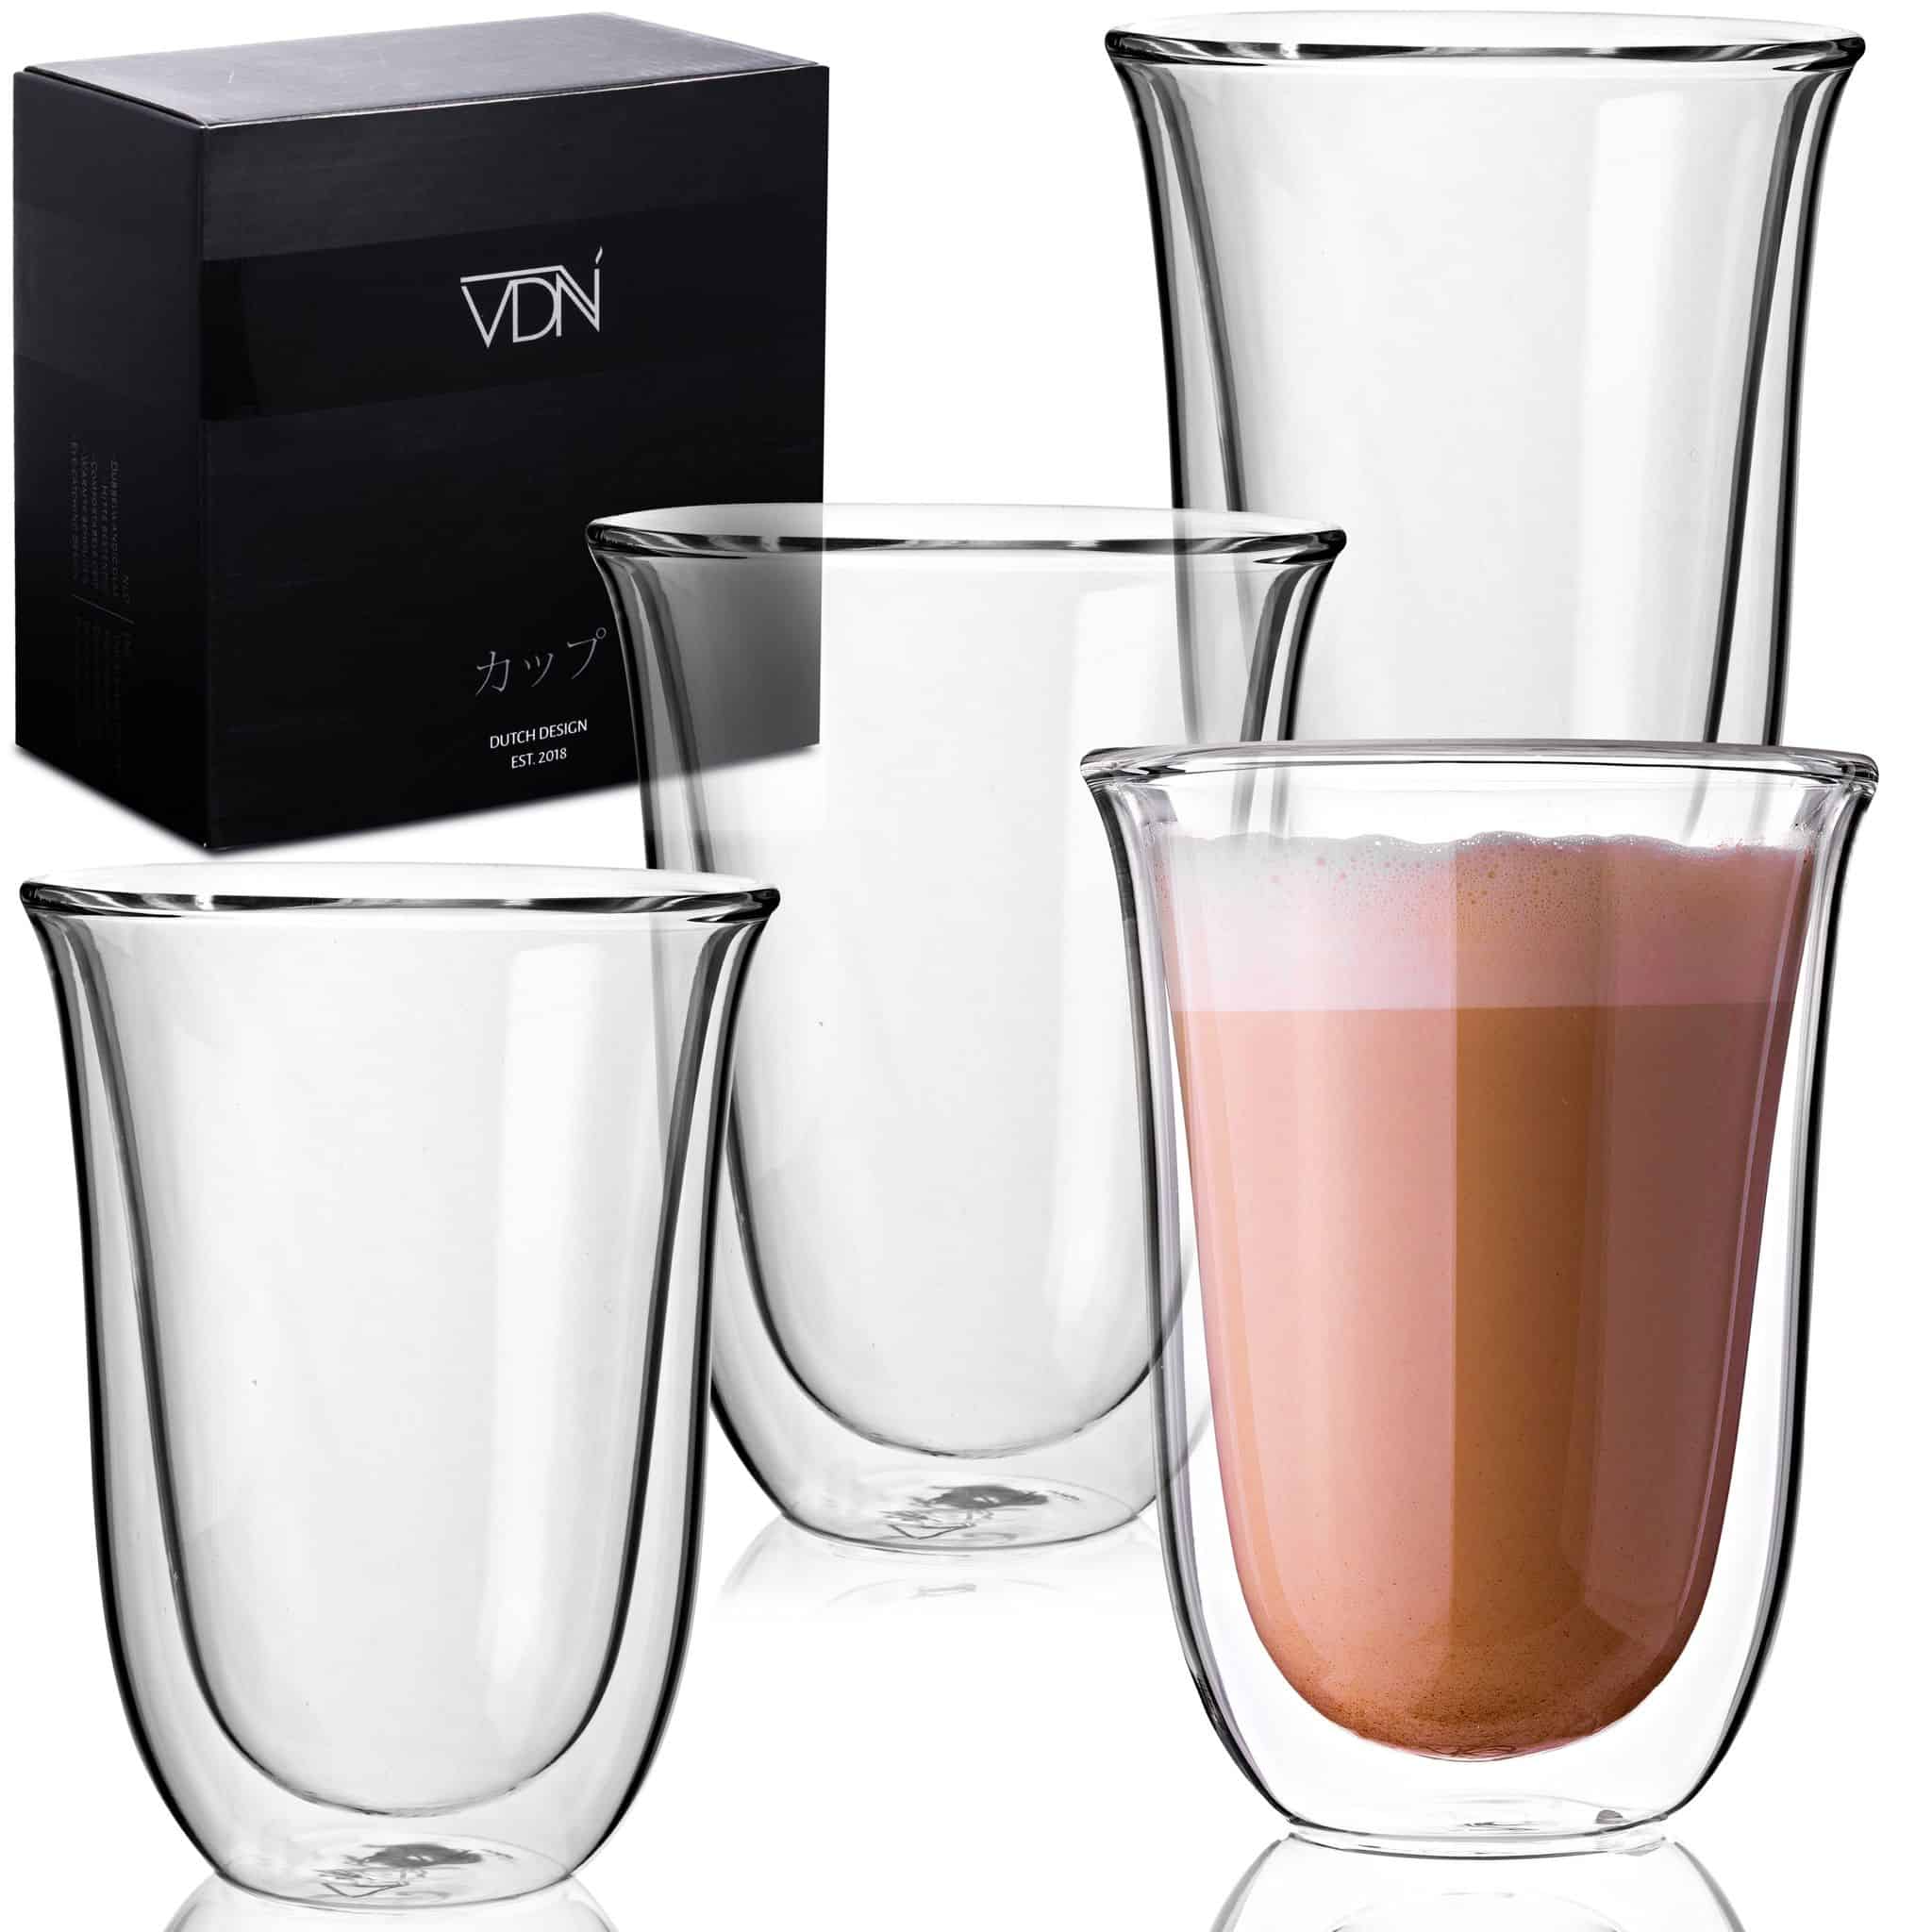 Mier Kapper Aandringen Dubbelwandige glazen latte macchiato - 300 ML - Set van 4 - VDN